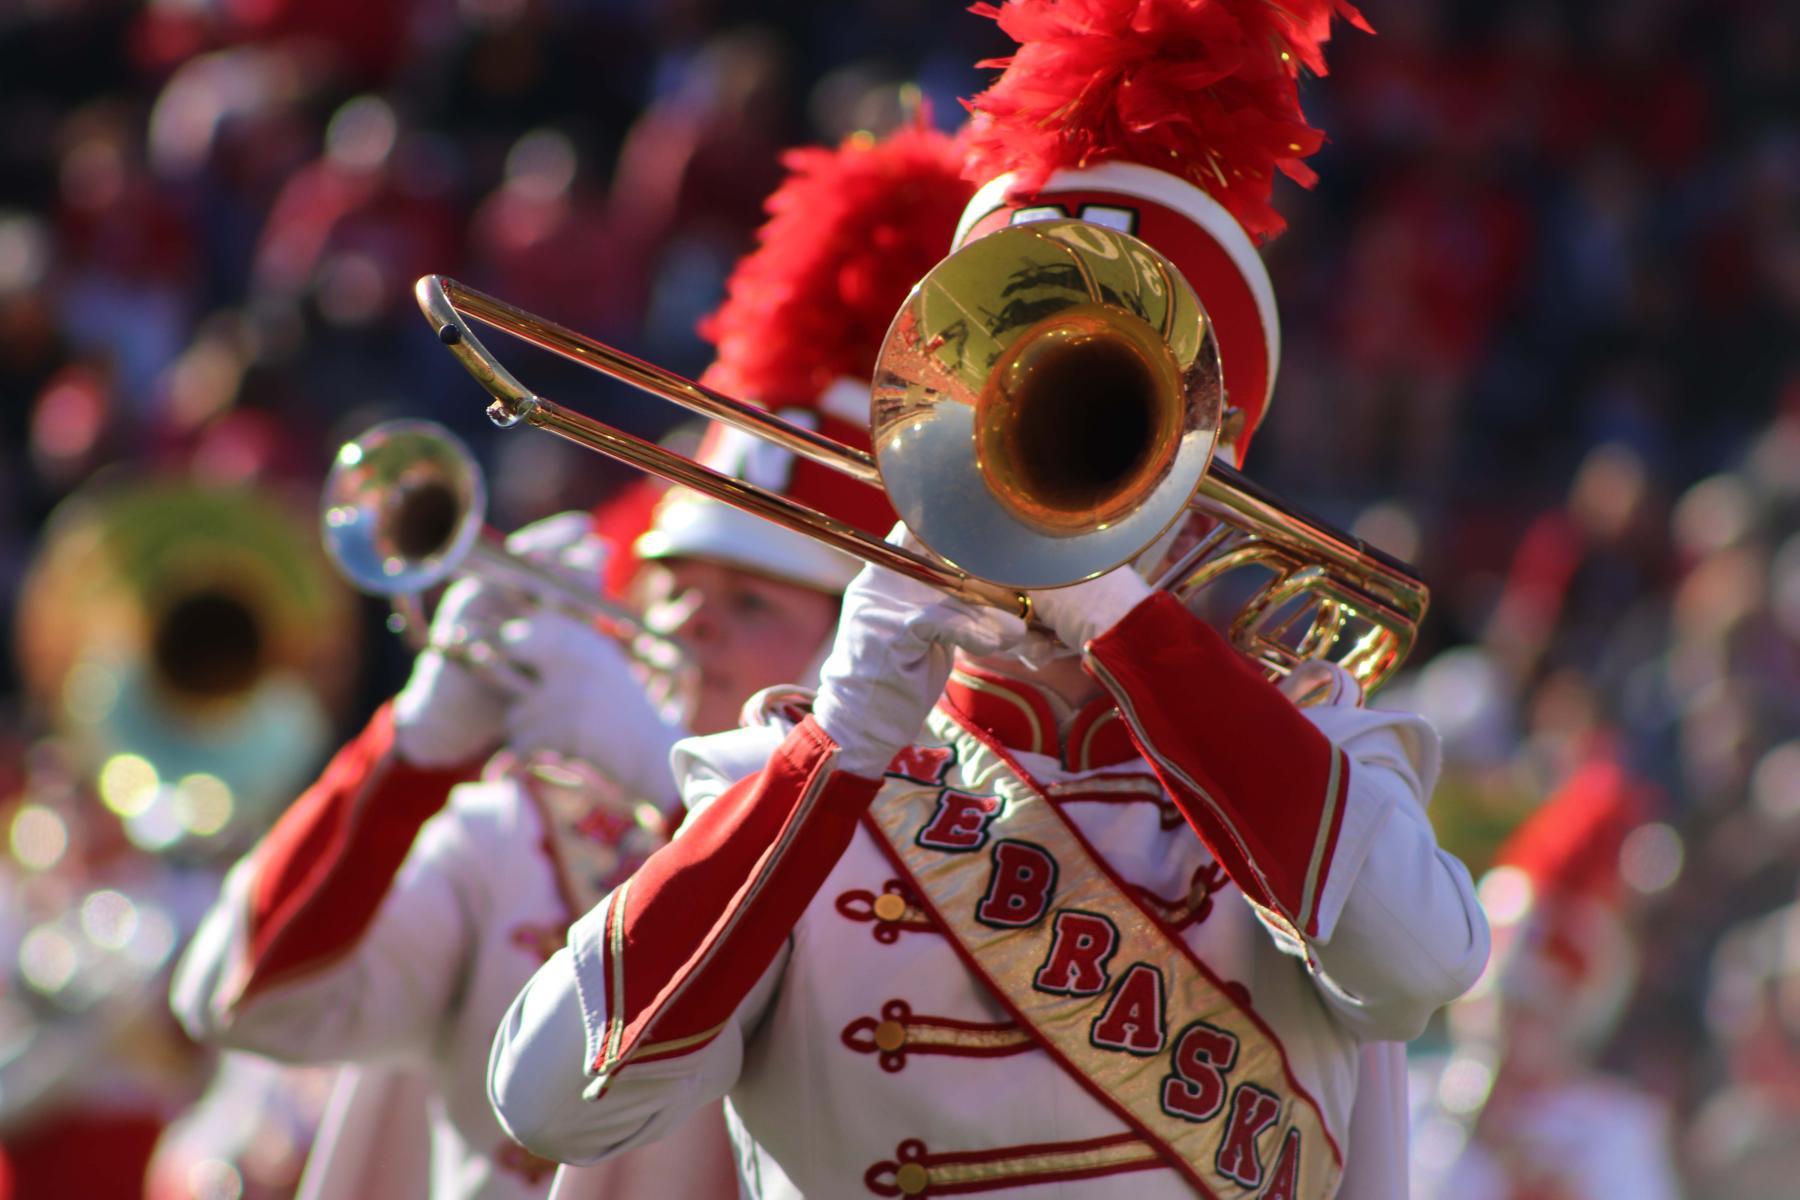 Cornhusker Marching Band trombone player performing in Memorial Stadium.